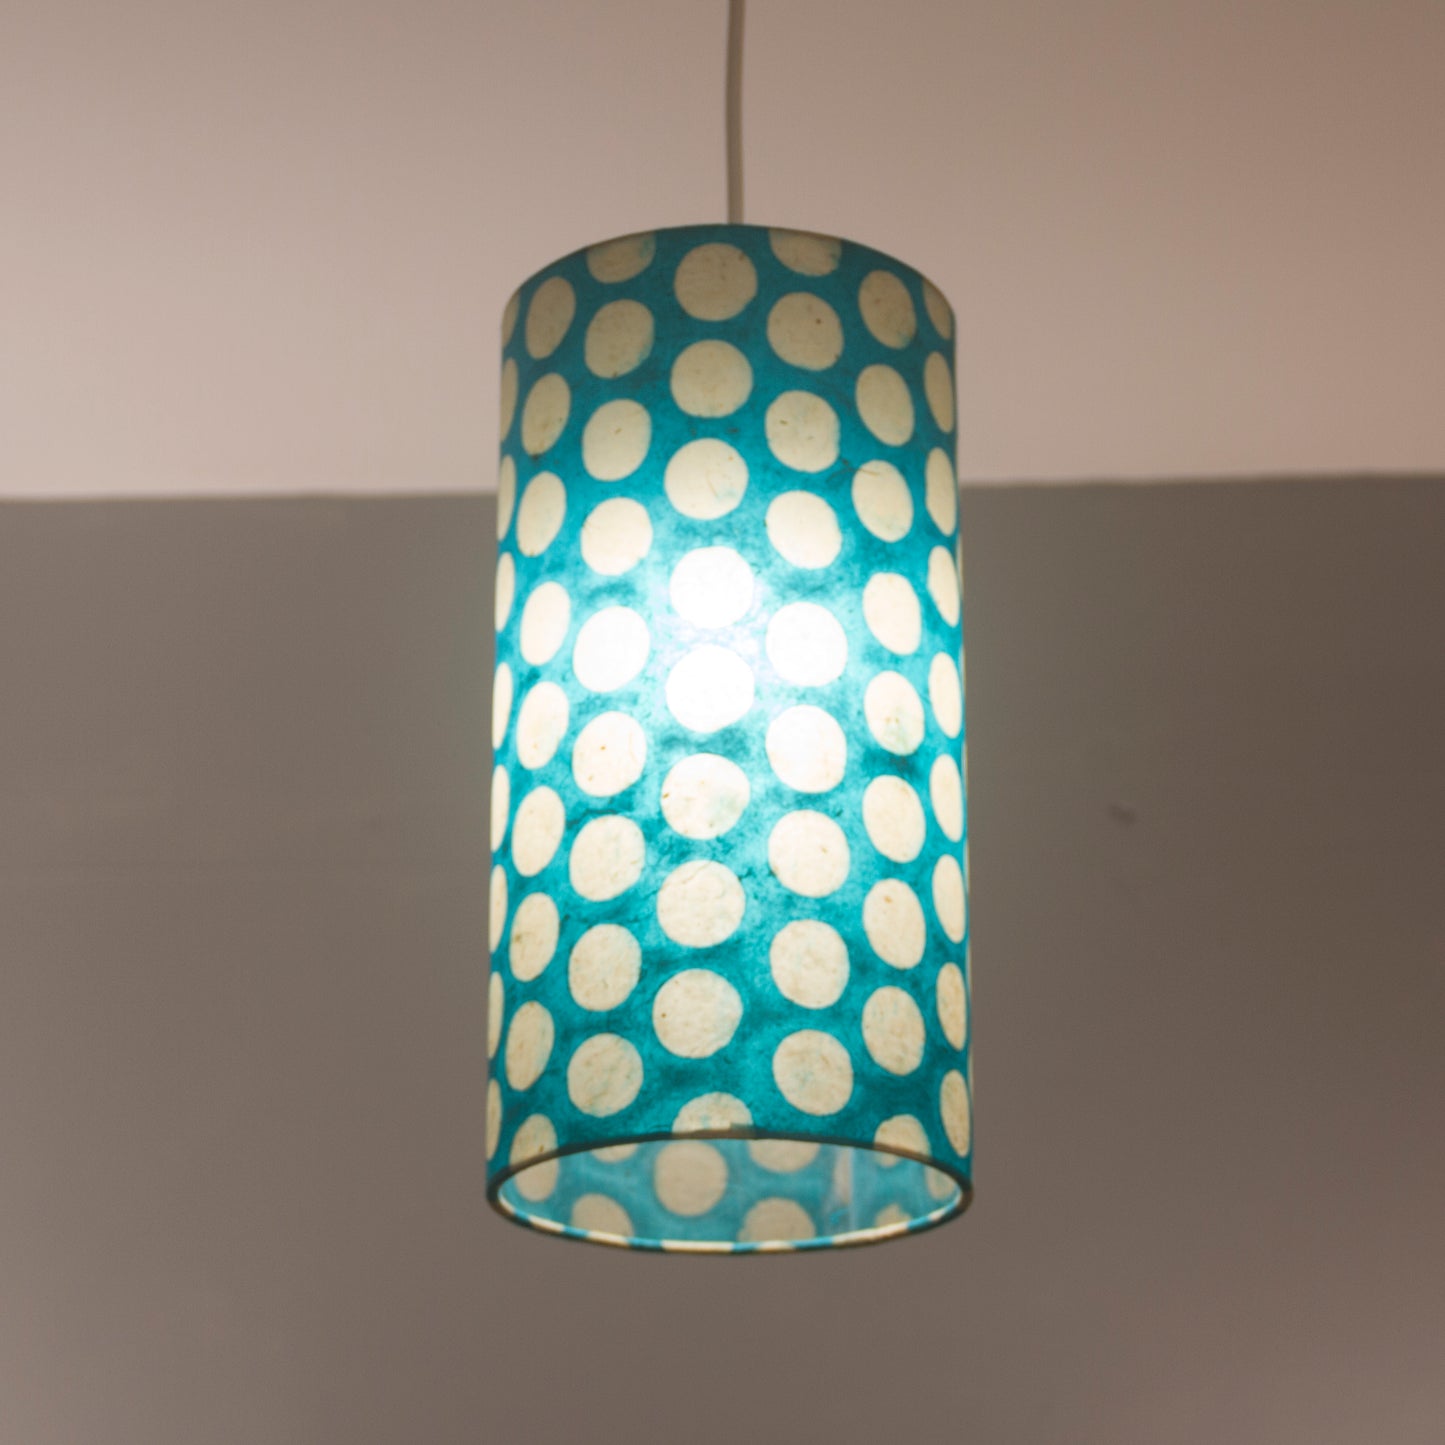 Square Lamp Shade - P97 - Batik Dots on Cyan, 40cm(w) x 20cm(h) x 40cm(d)